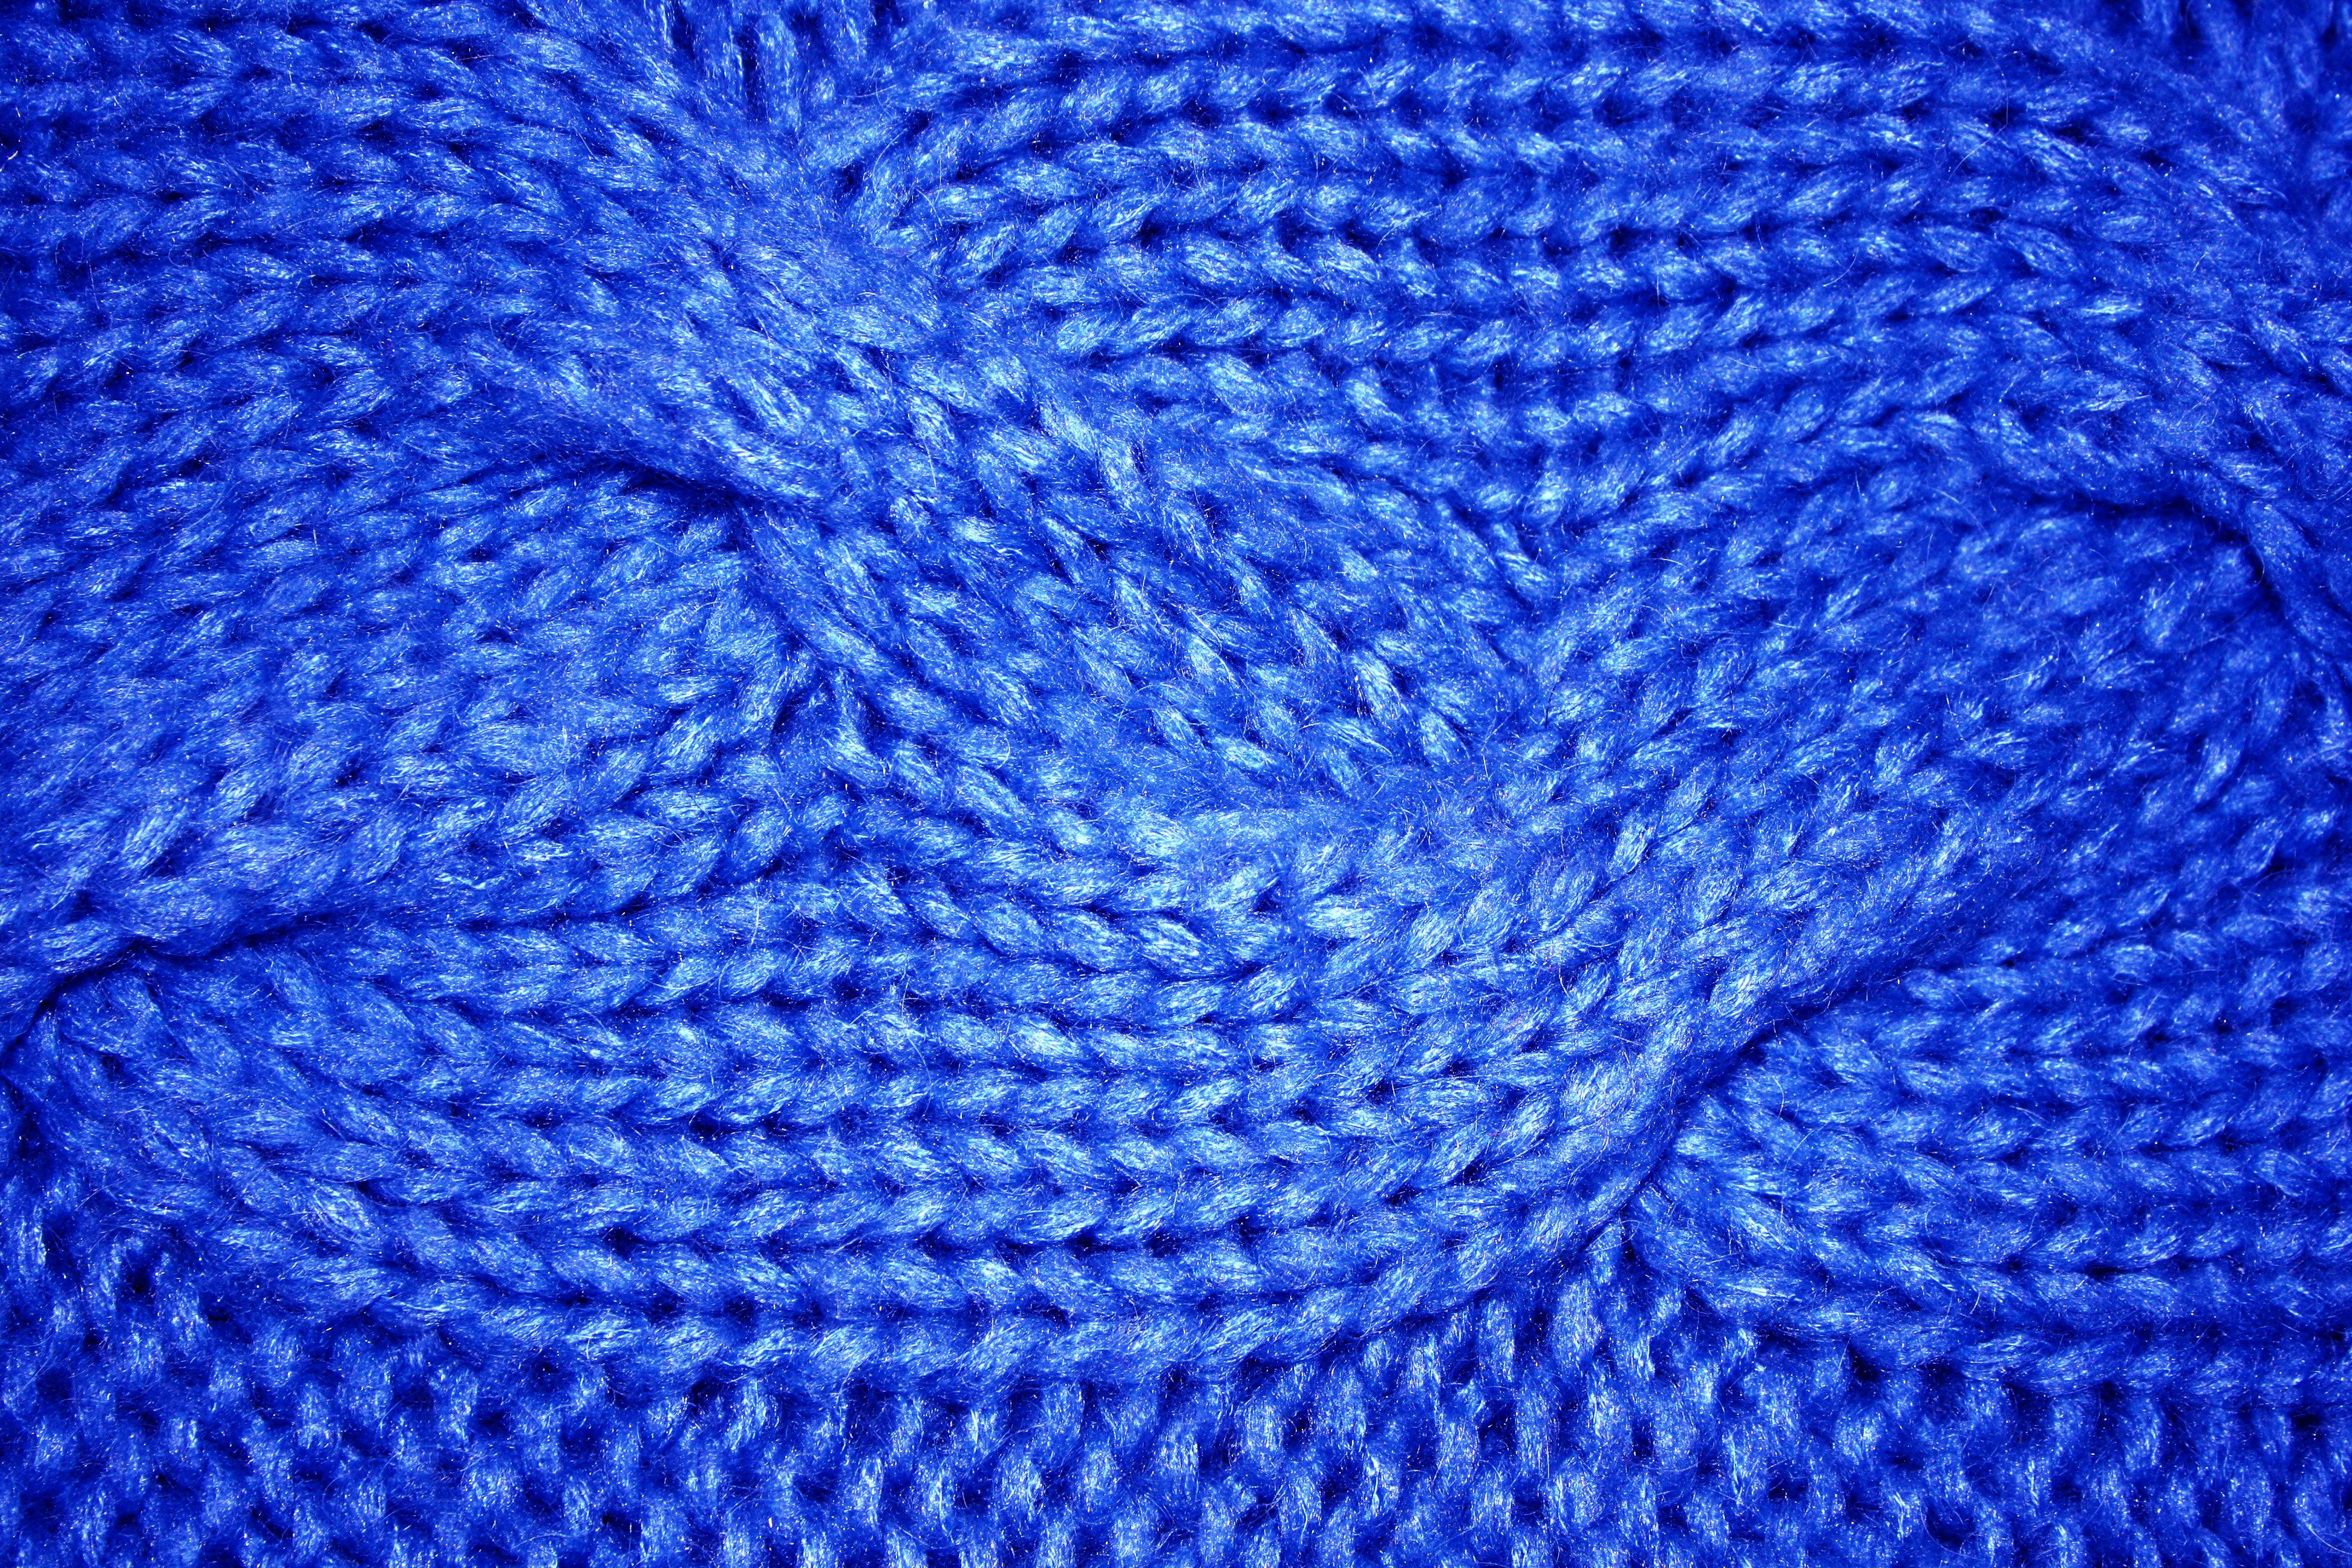 Cobalt Blue Cable Knit Pattern Texture Picture Free Photograph